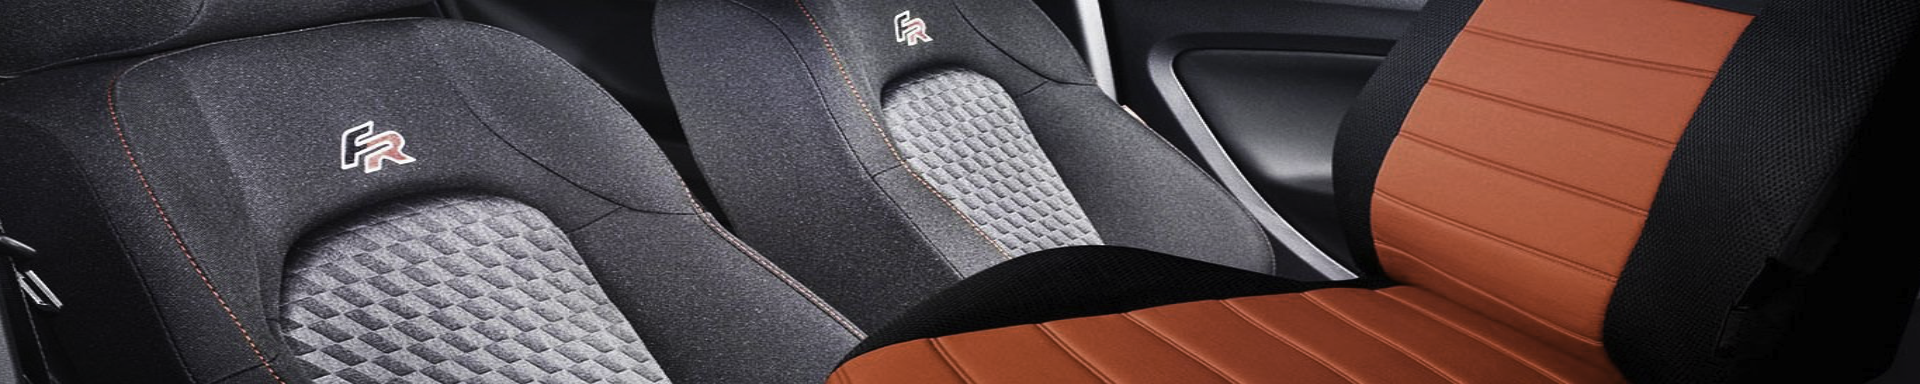 Cloth Seat Covers | GarageAndFab.com | Munro Industries gf-100103051103